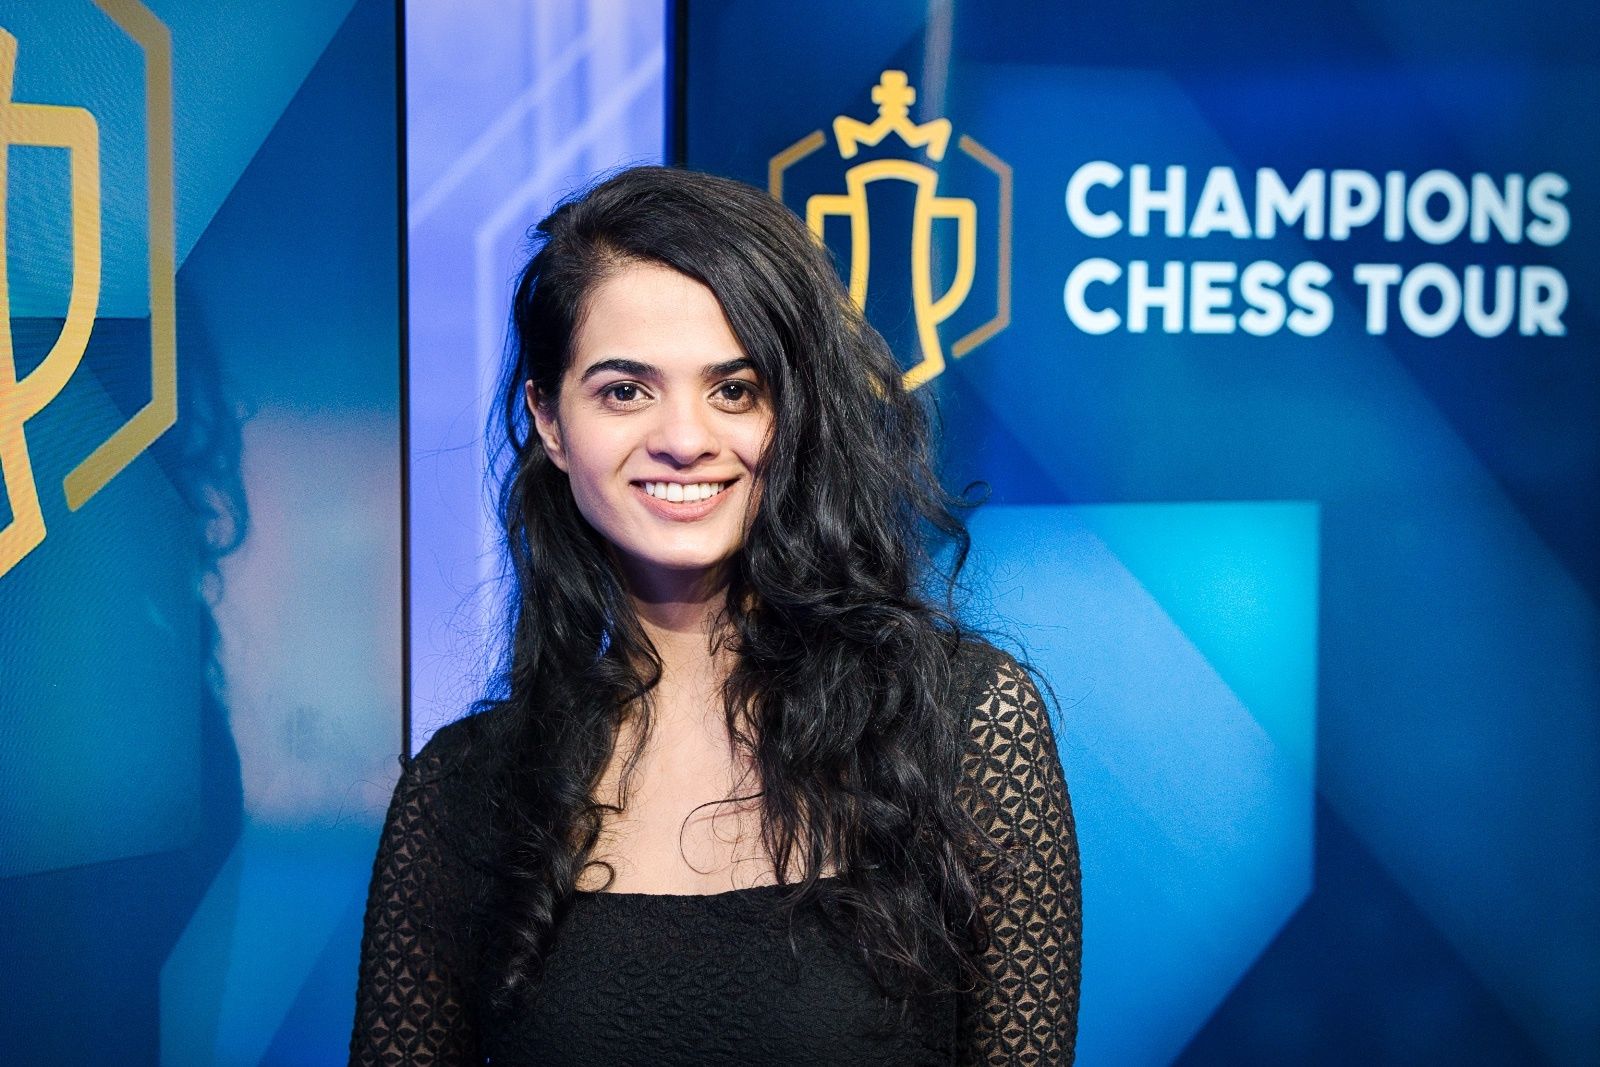 Ali-razor sharp! Teen hotshot Firouzja storms into semis - Meltwater  Champions Chess Tour 2022